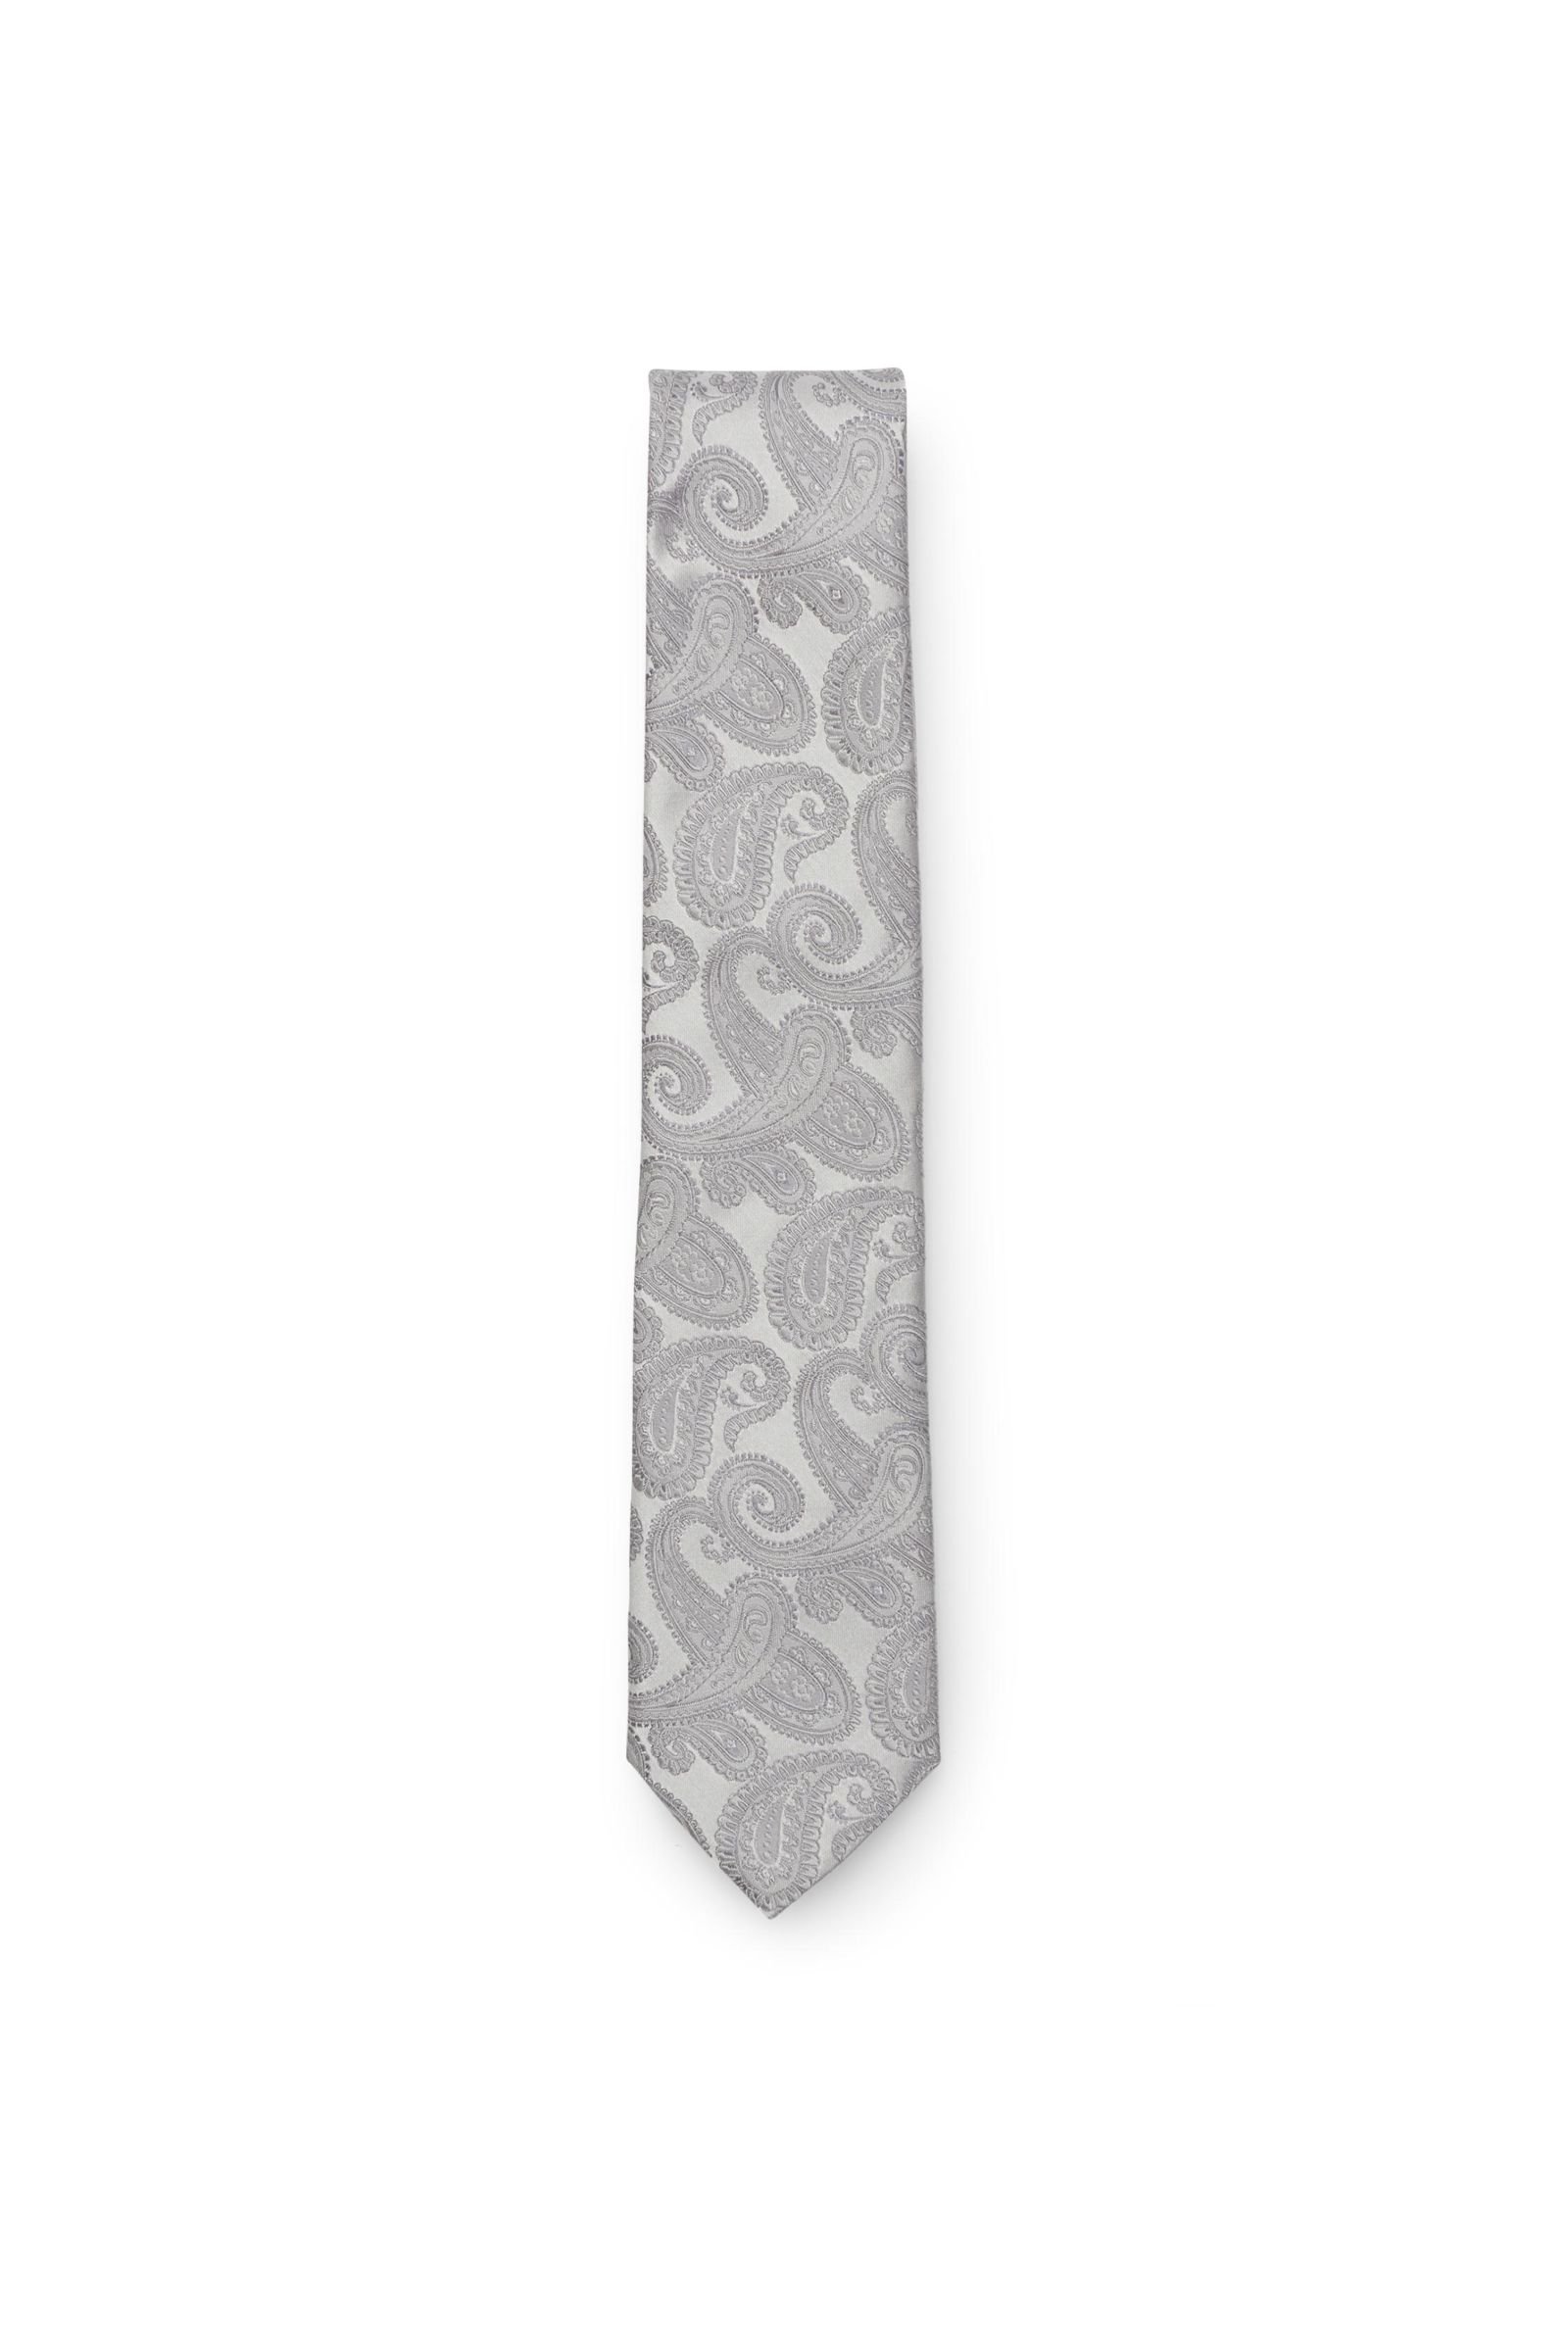 Silk tie silver-grey patterned